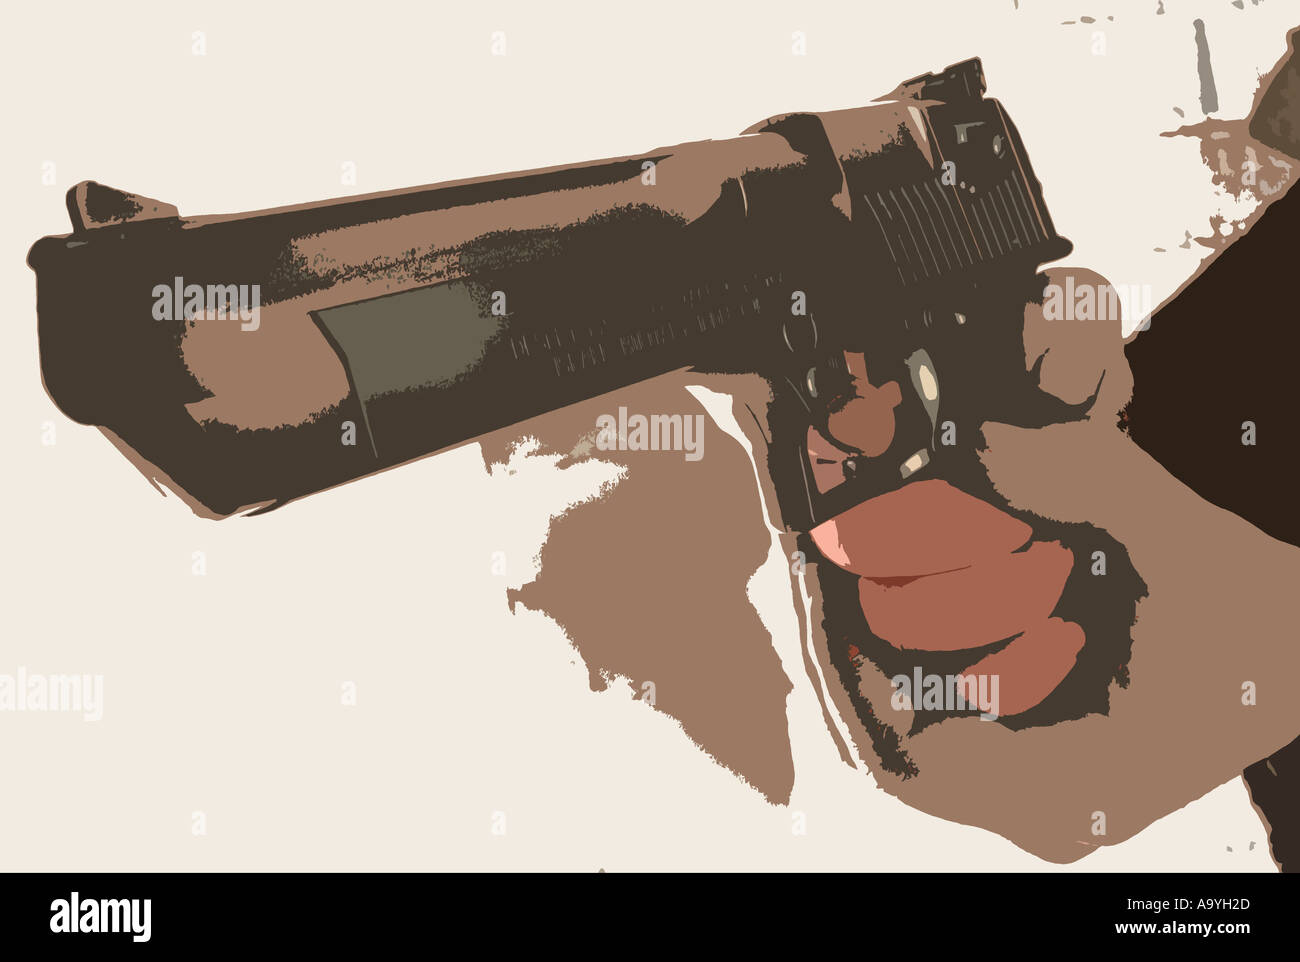 an illustration of hands holding a desert eagle gun and firing Stock Photo